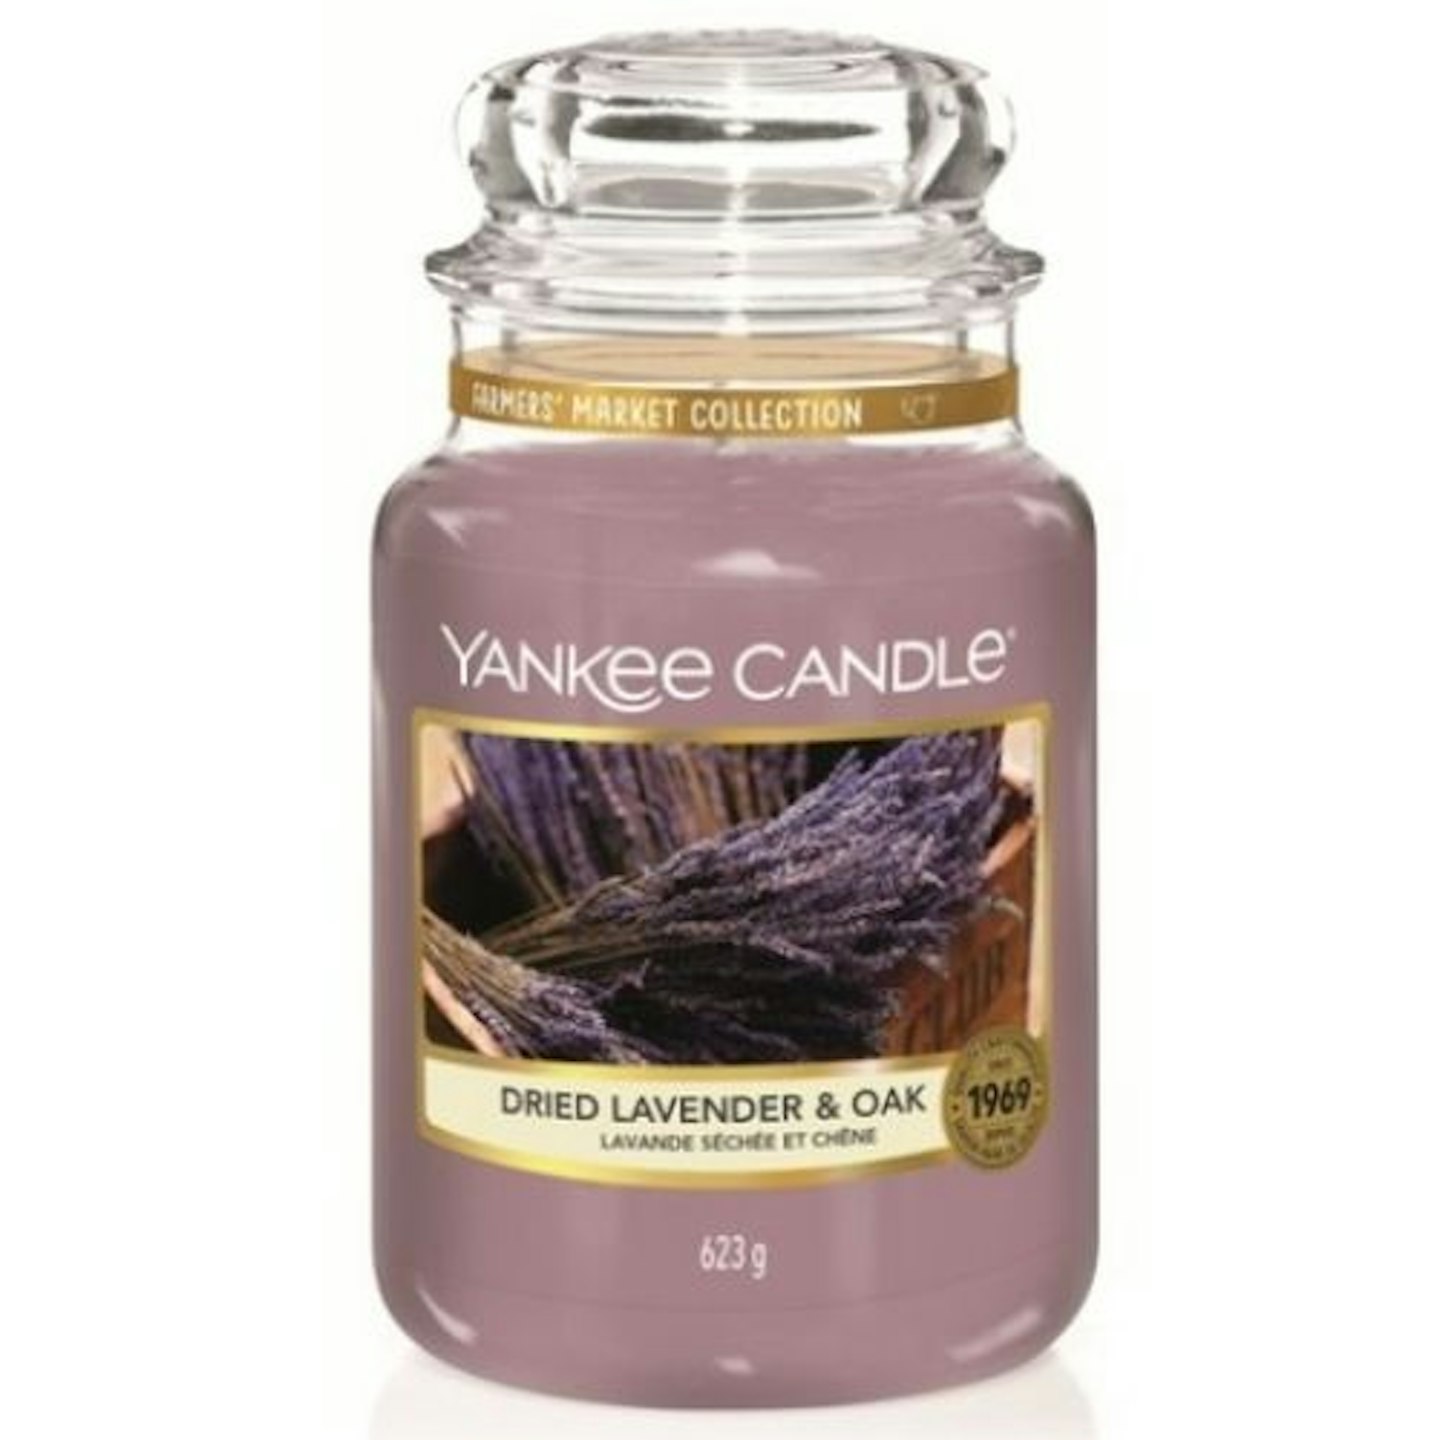 Dried Lavender & Oak Large Jar Candle